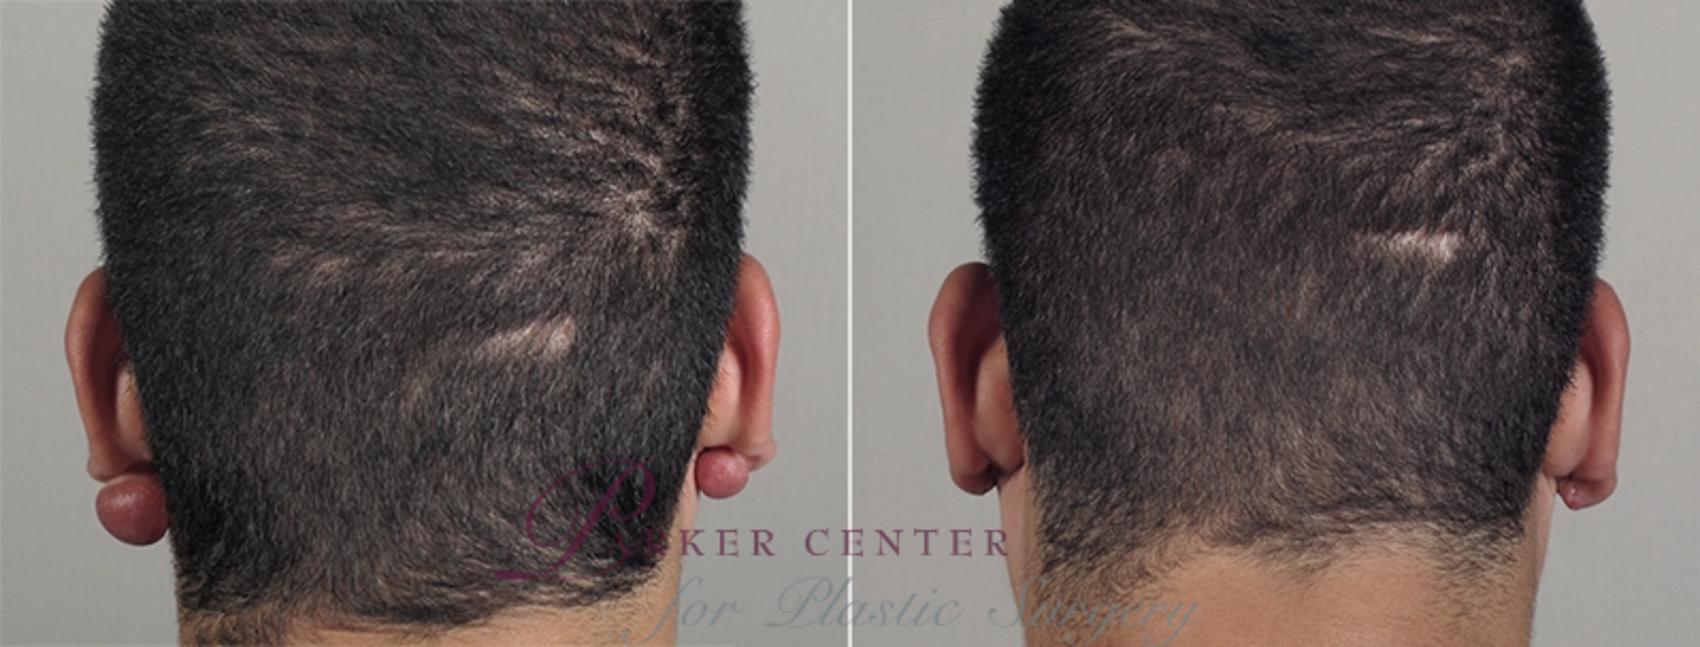 Skin Cancer Treatment Case 1036 Before & After View #2 | Paramus, NJ | Parker Center for Plastic Surgery